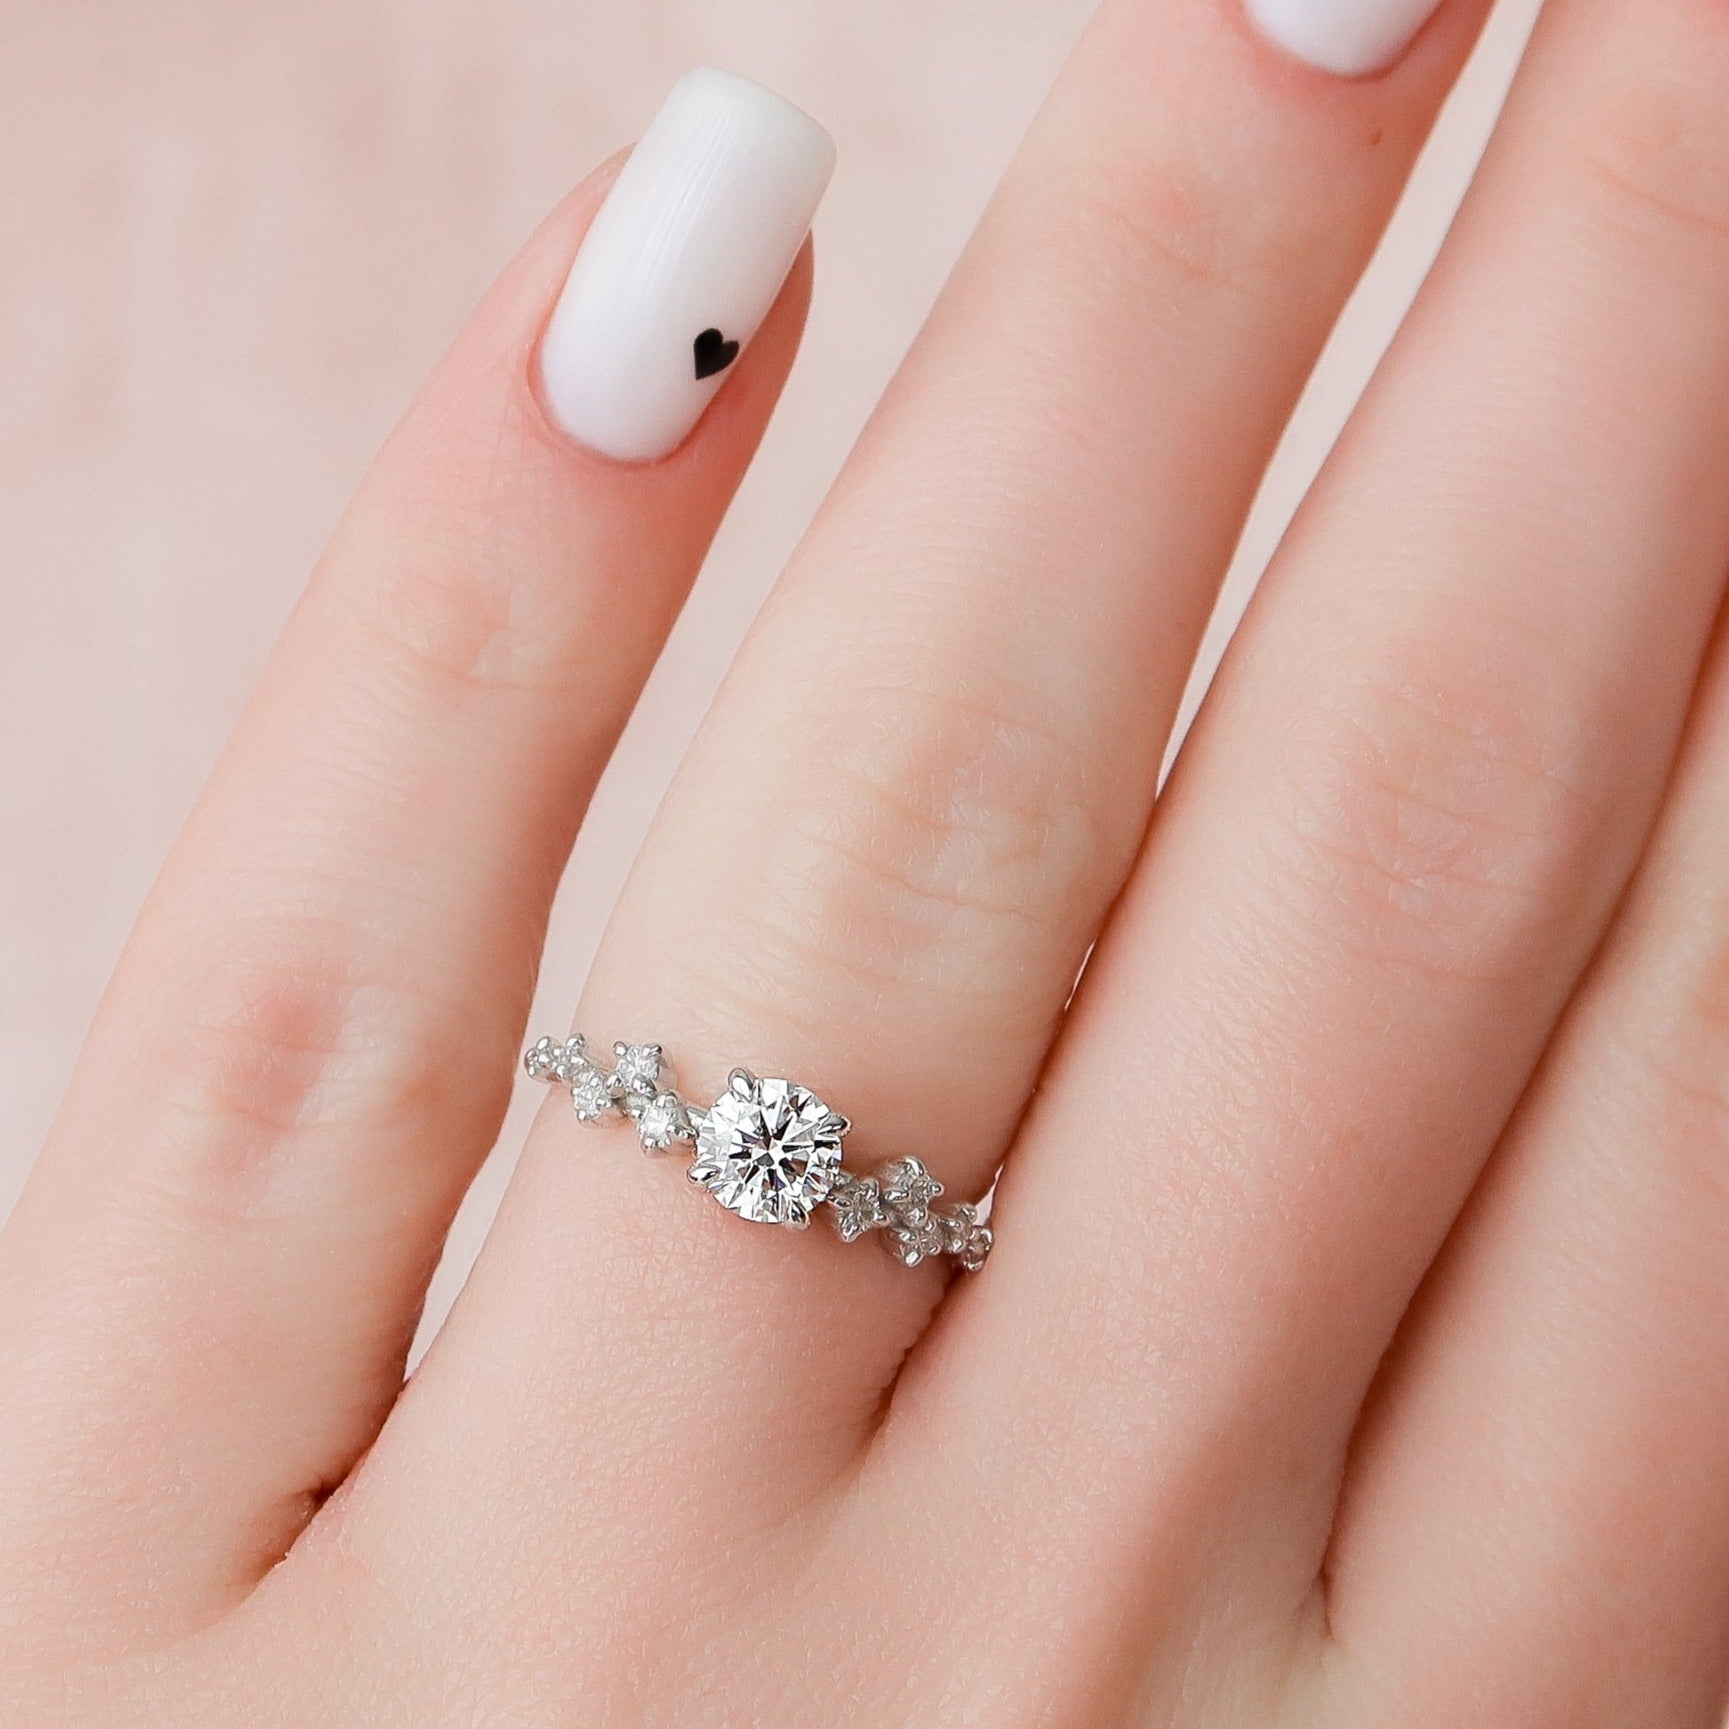 Round Cut Cluster Bridal Set Diamond Ring